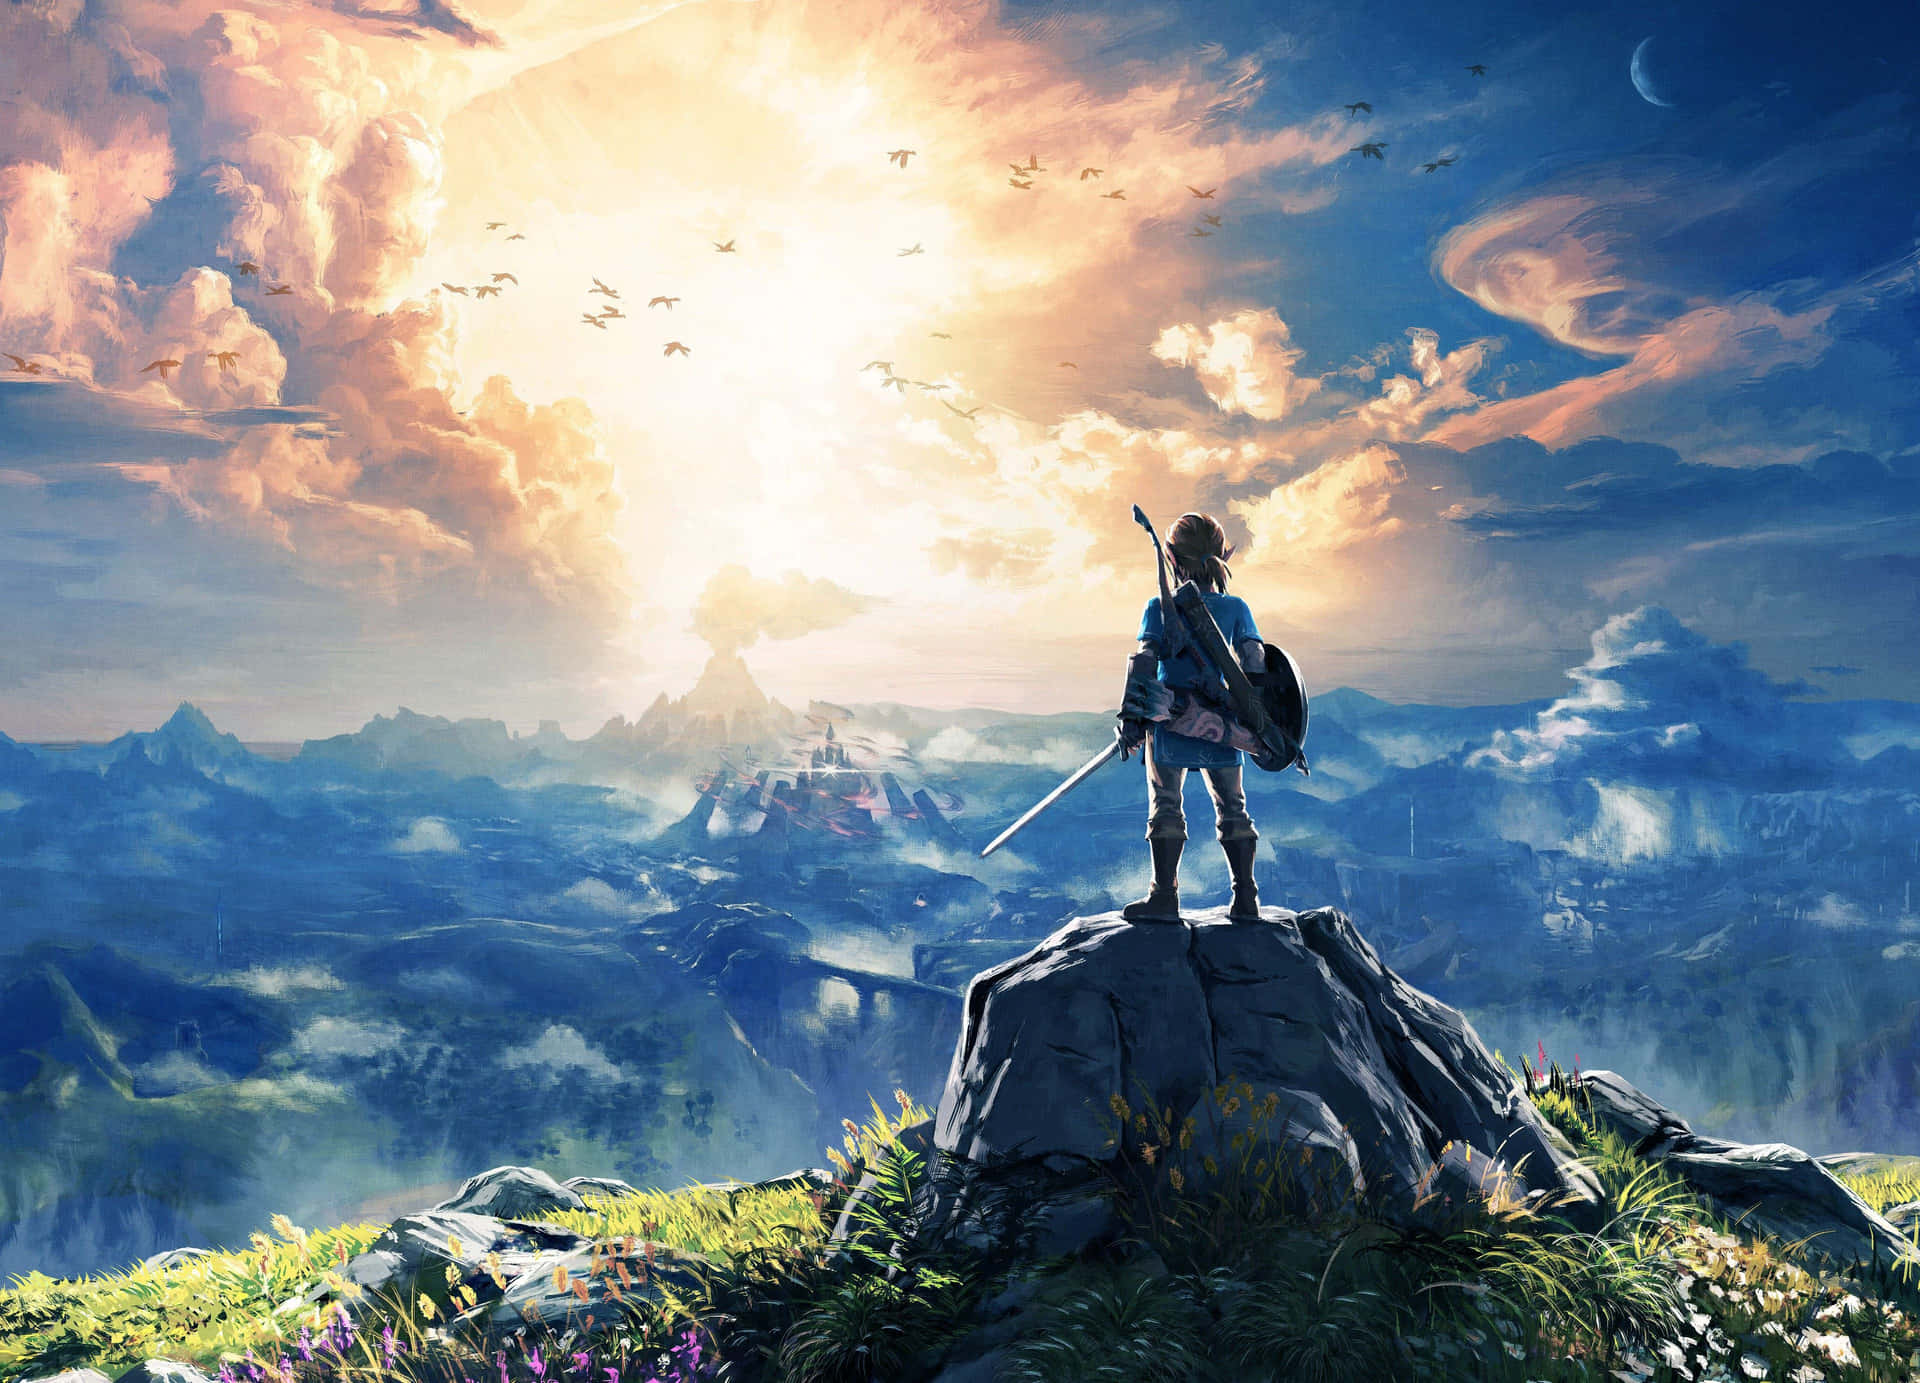 The Legend of Zelda: Breath of the Wild - Stunning Open World Adventure